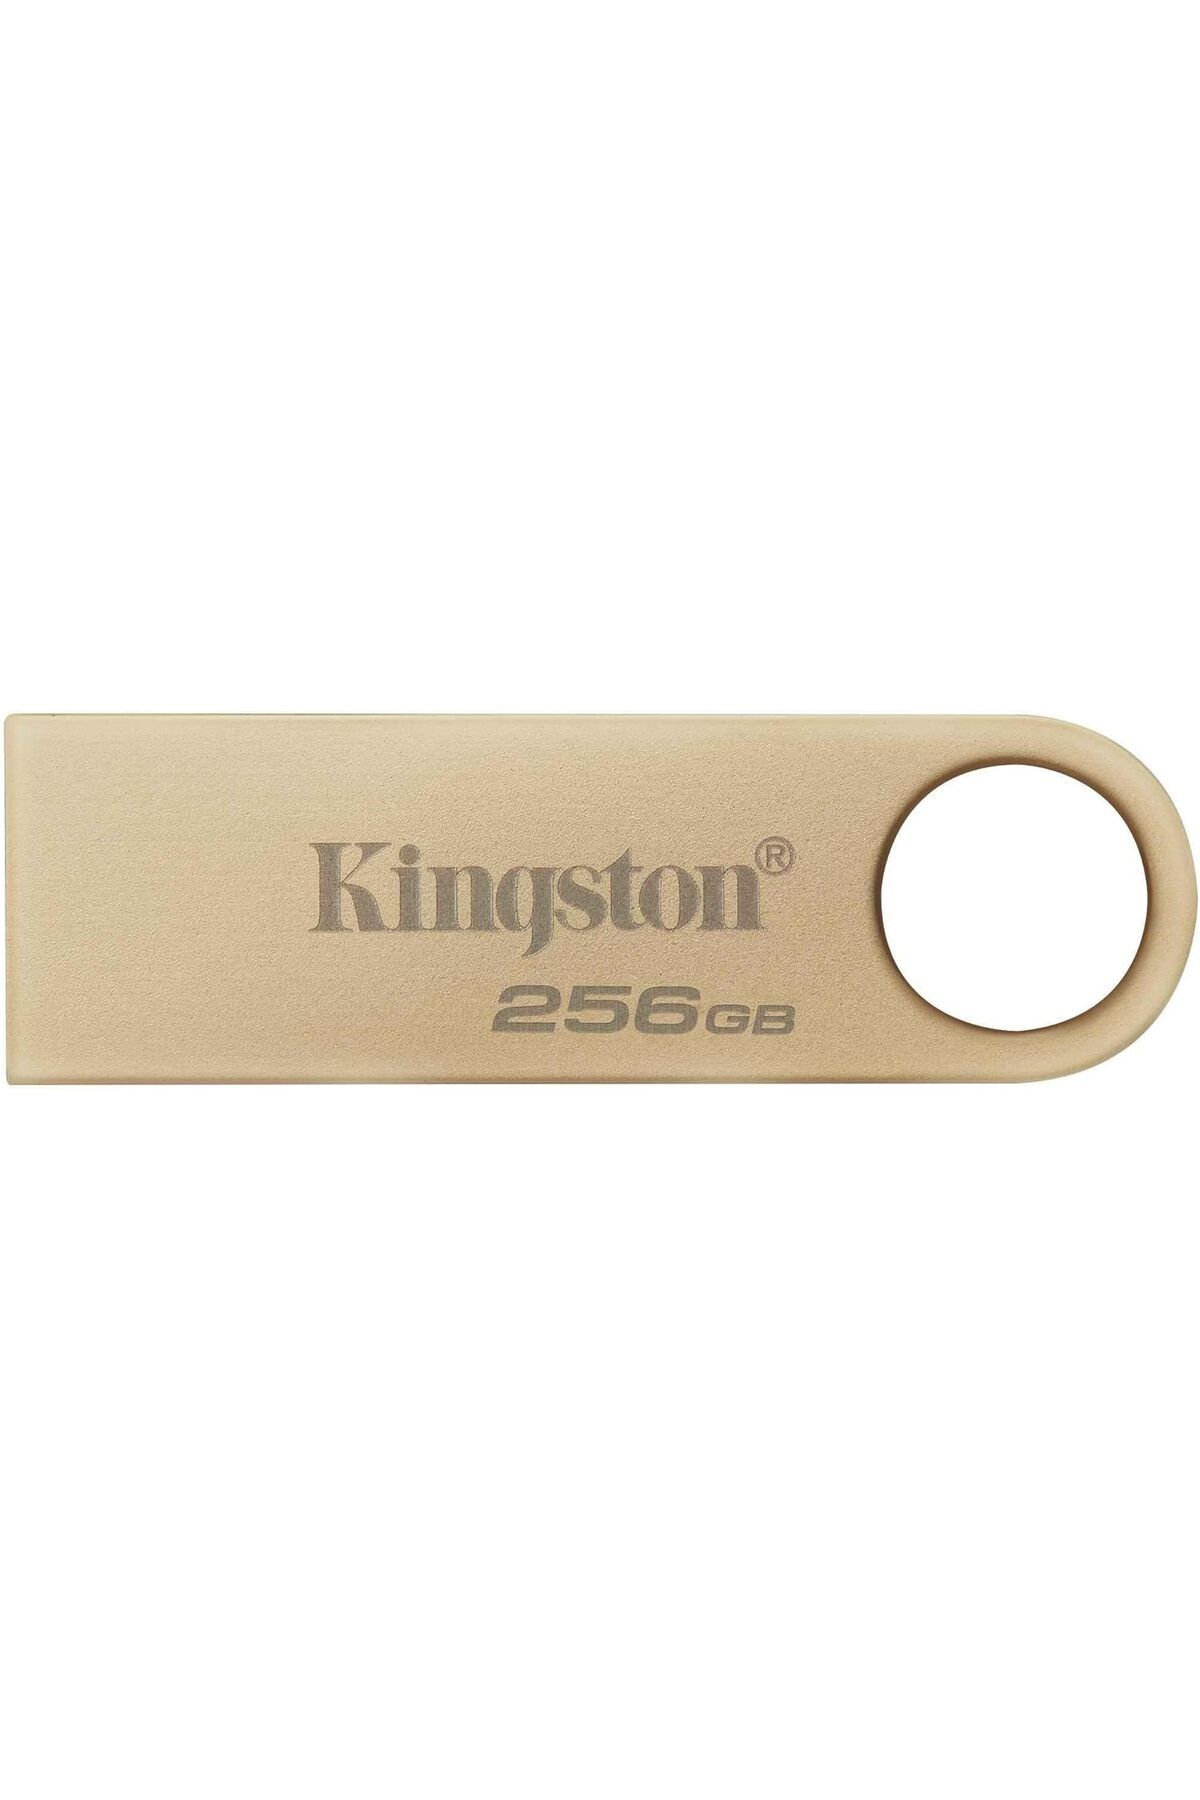 Kingston Dtse9G3-256Gb 256Gb 220Mb-S Metal Usb 3.2 Gen 1 Datatraveler Se9 G3 Flash Bellek